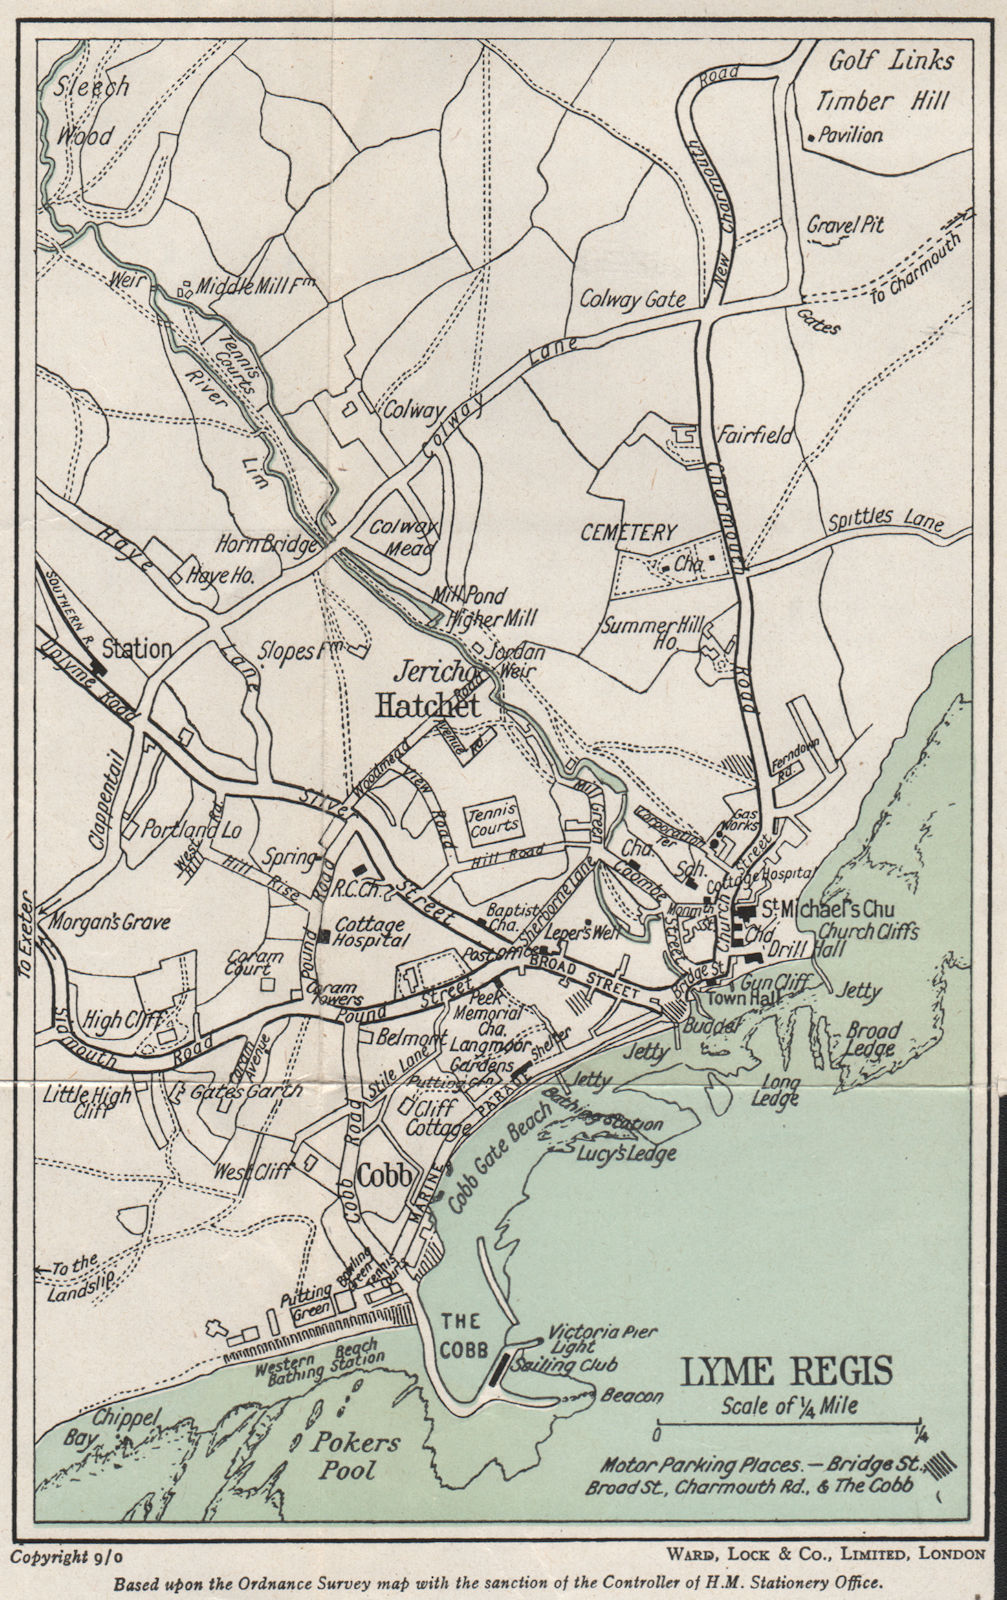 Associate Product LYME REGIS vintage town/city plan. Dorset. WARD LOCK 1952 old vintage map